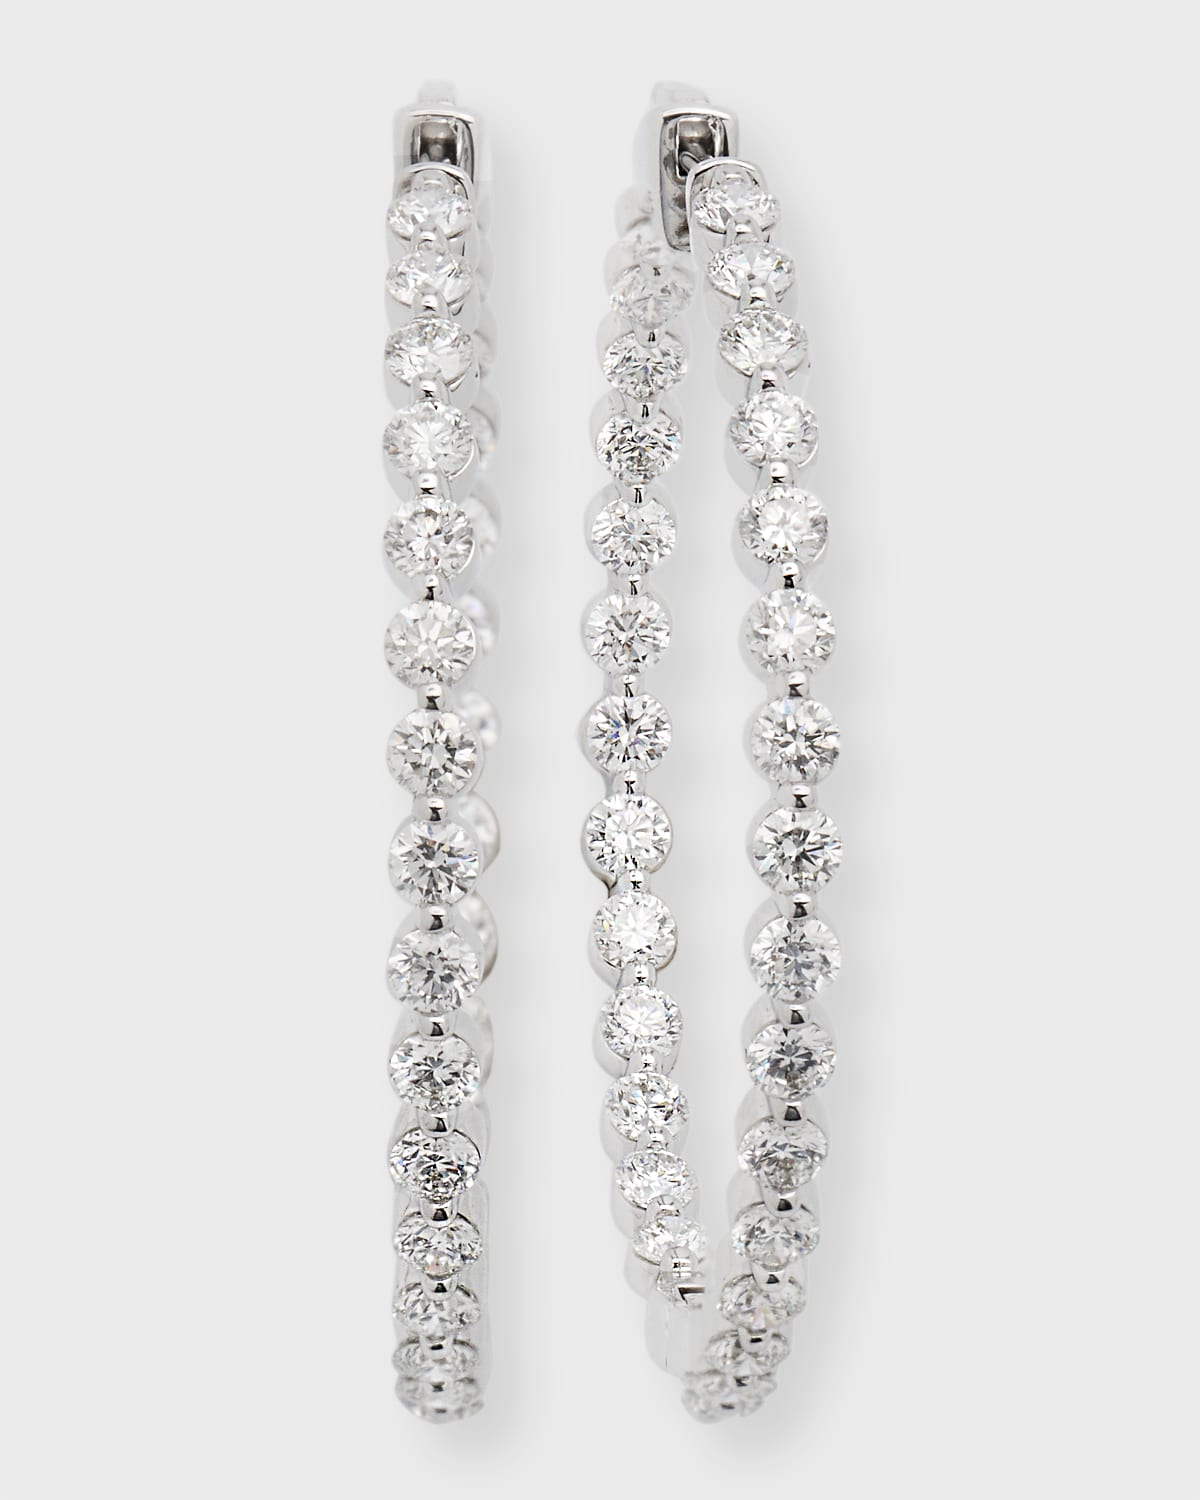 Neiman Marcus Diamonds 18k White Gold Diamond Hoop Earrings, 1.5"l